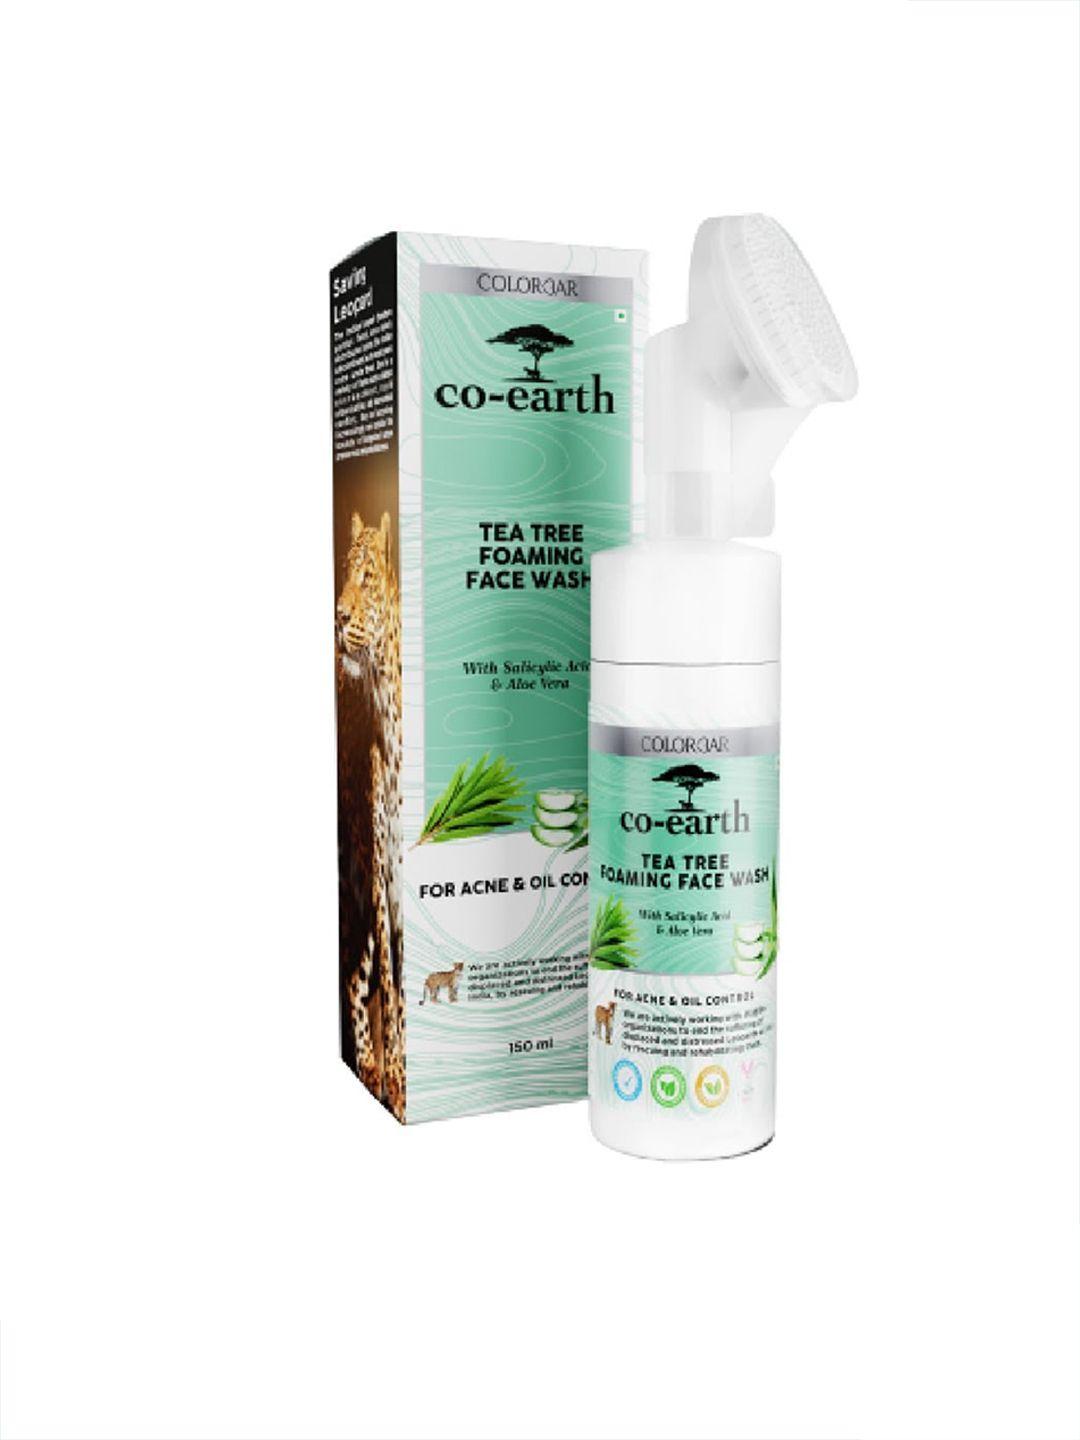 colorbar co-earth tea tree foaming face wash for acne & oil-control 150ml